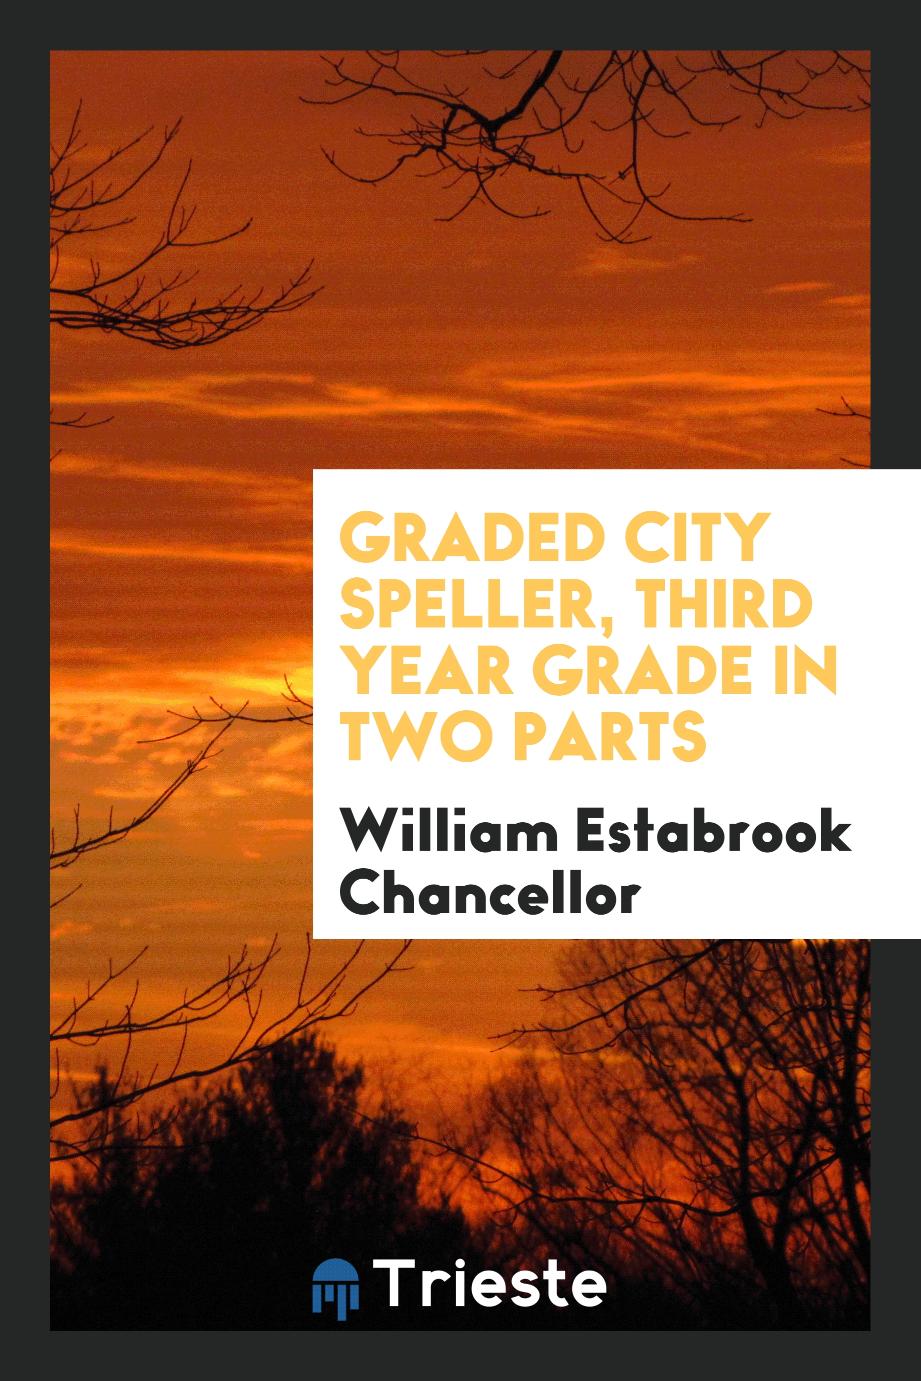 Graded City Speller, third year grade in two parts